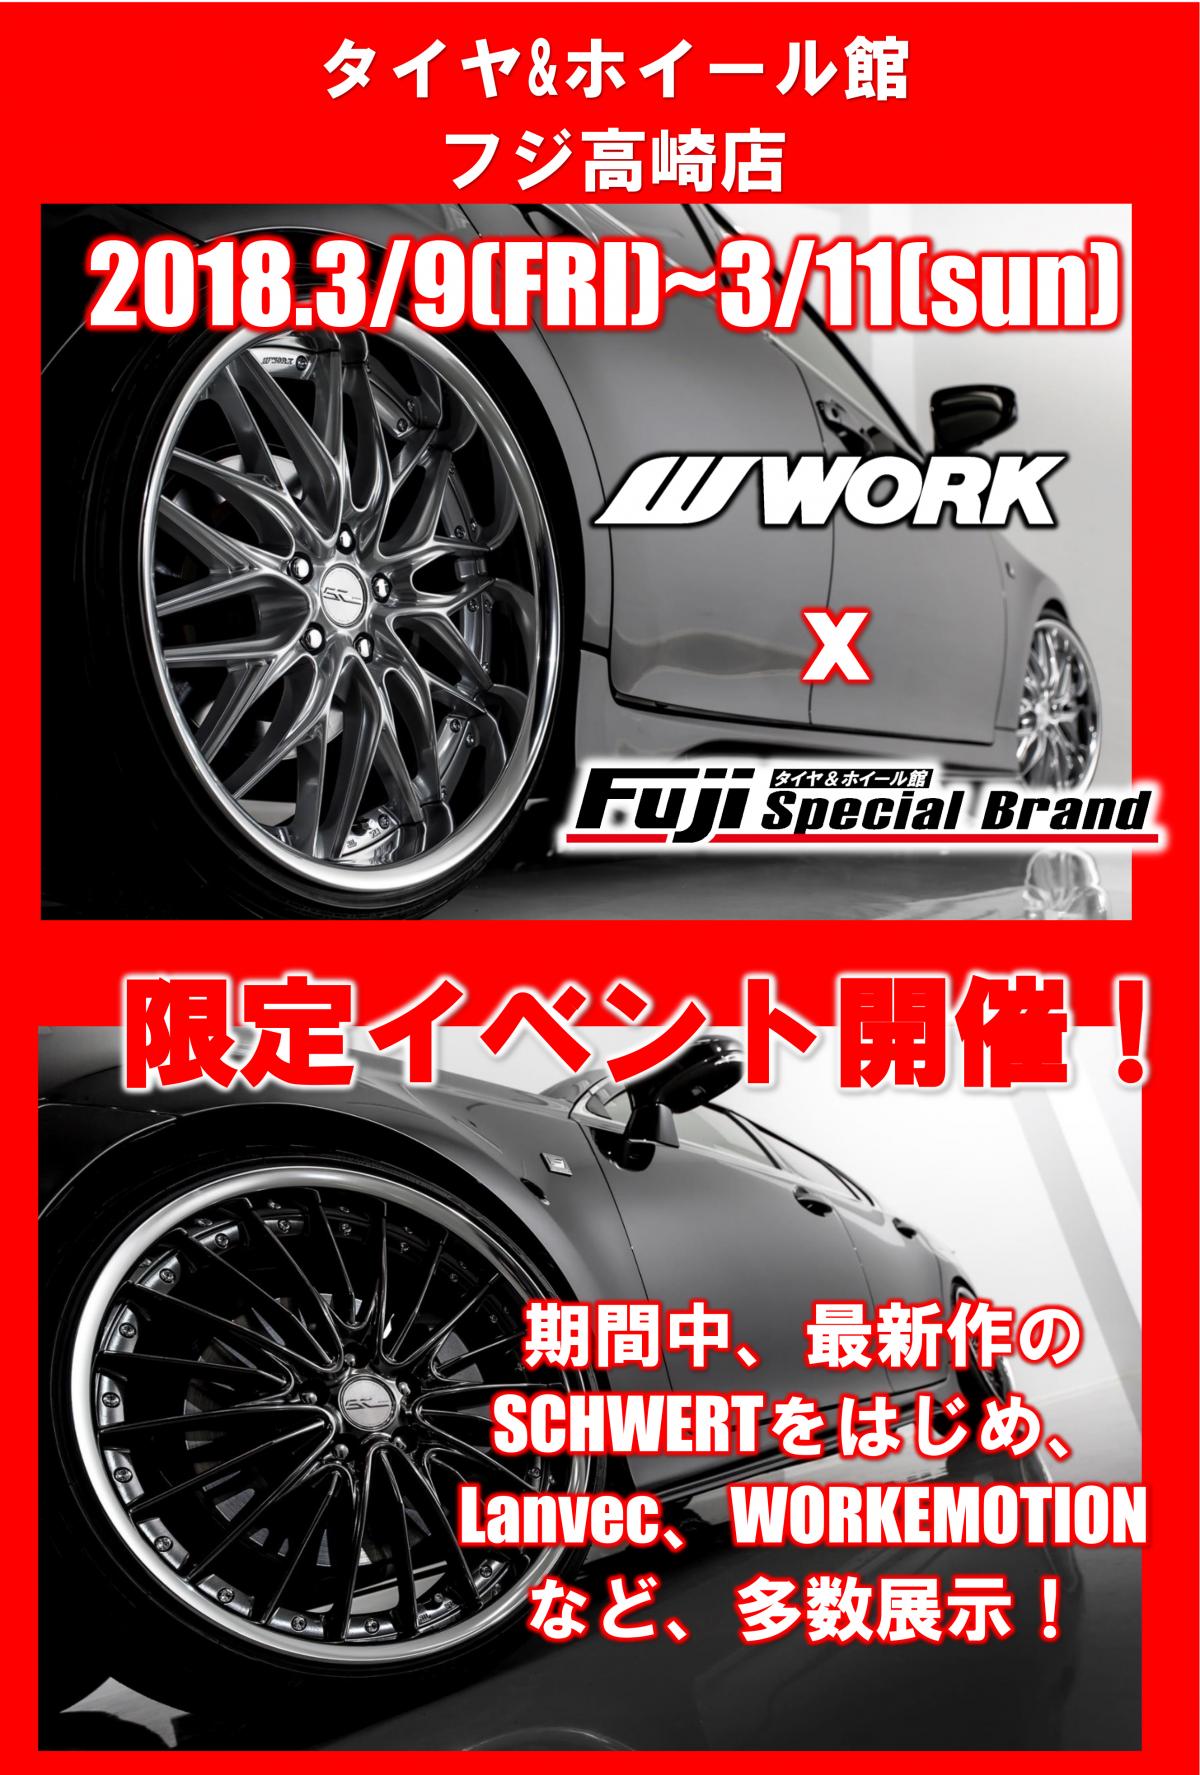 Tire & Wheel House Fuji Takasaki Store WORK Fair